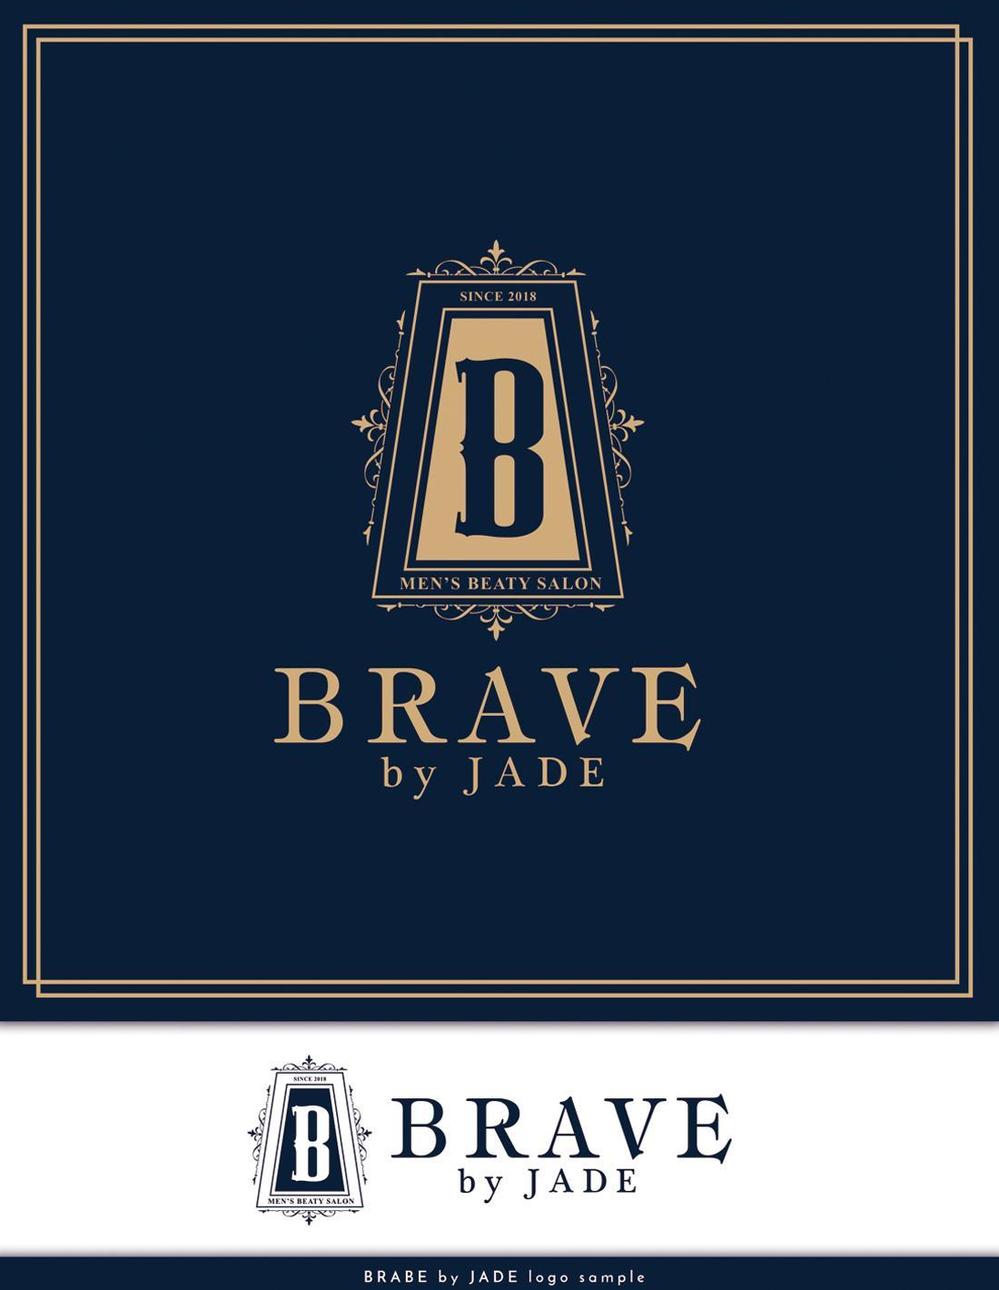 BRAVE by JADE logo1.jpg